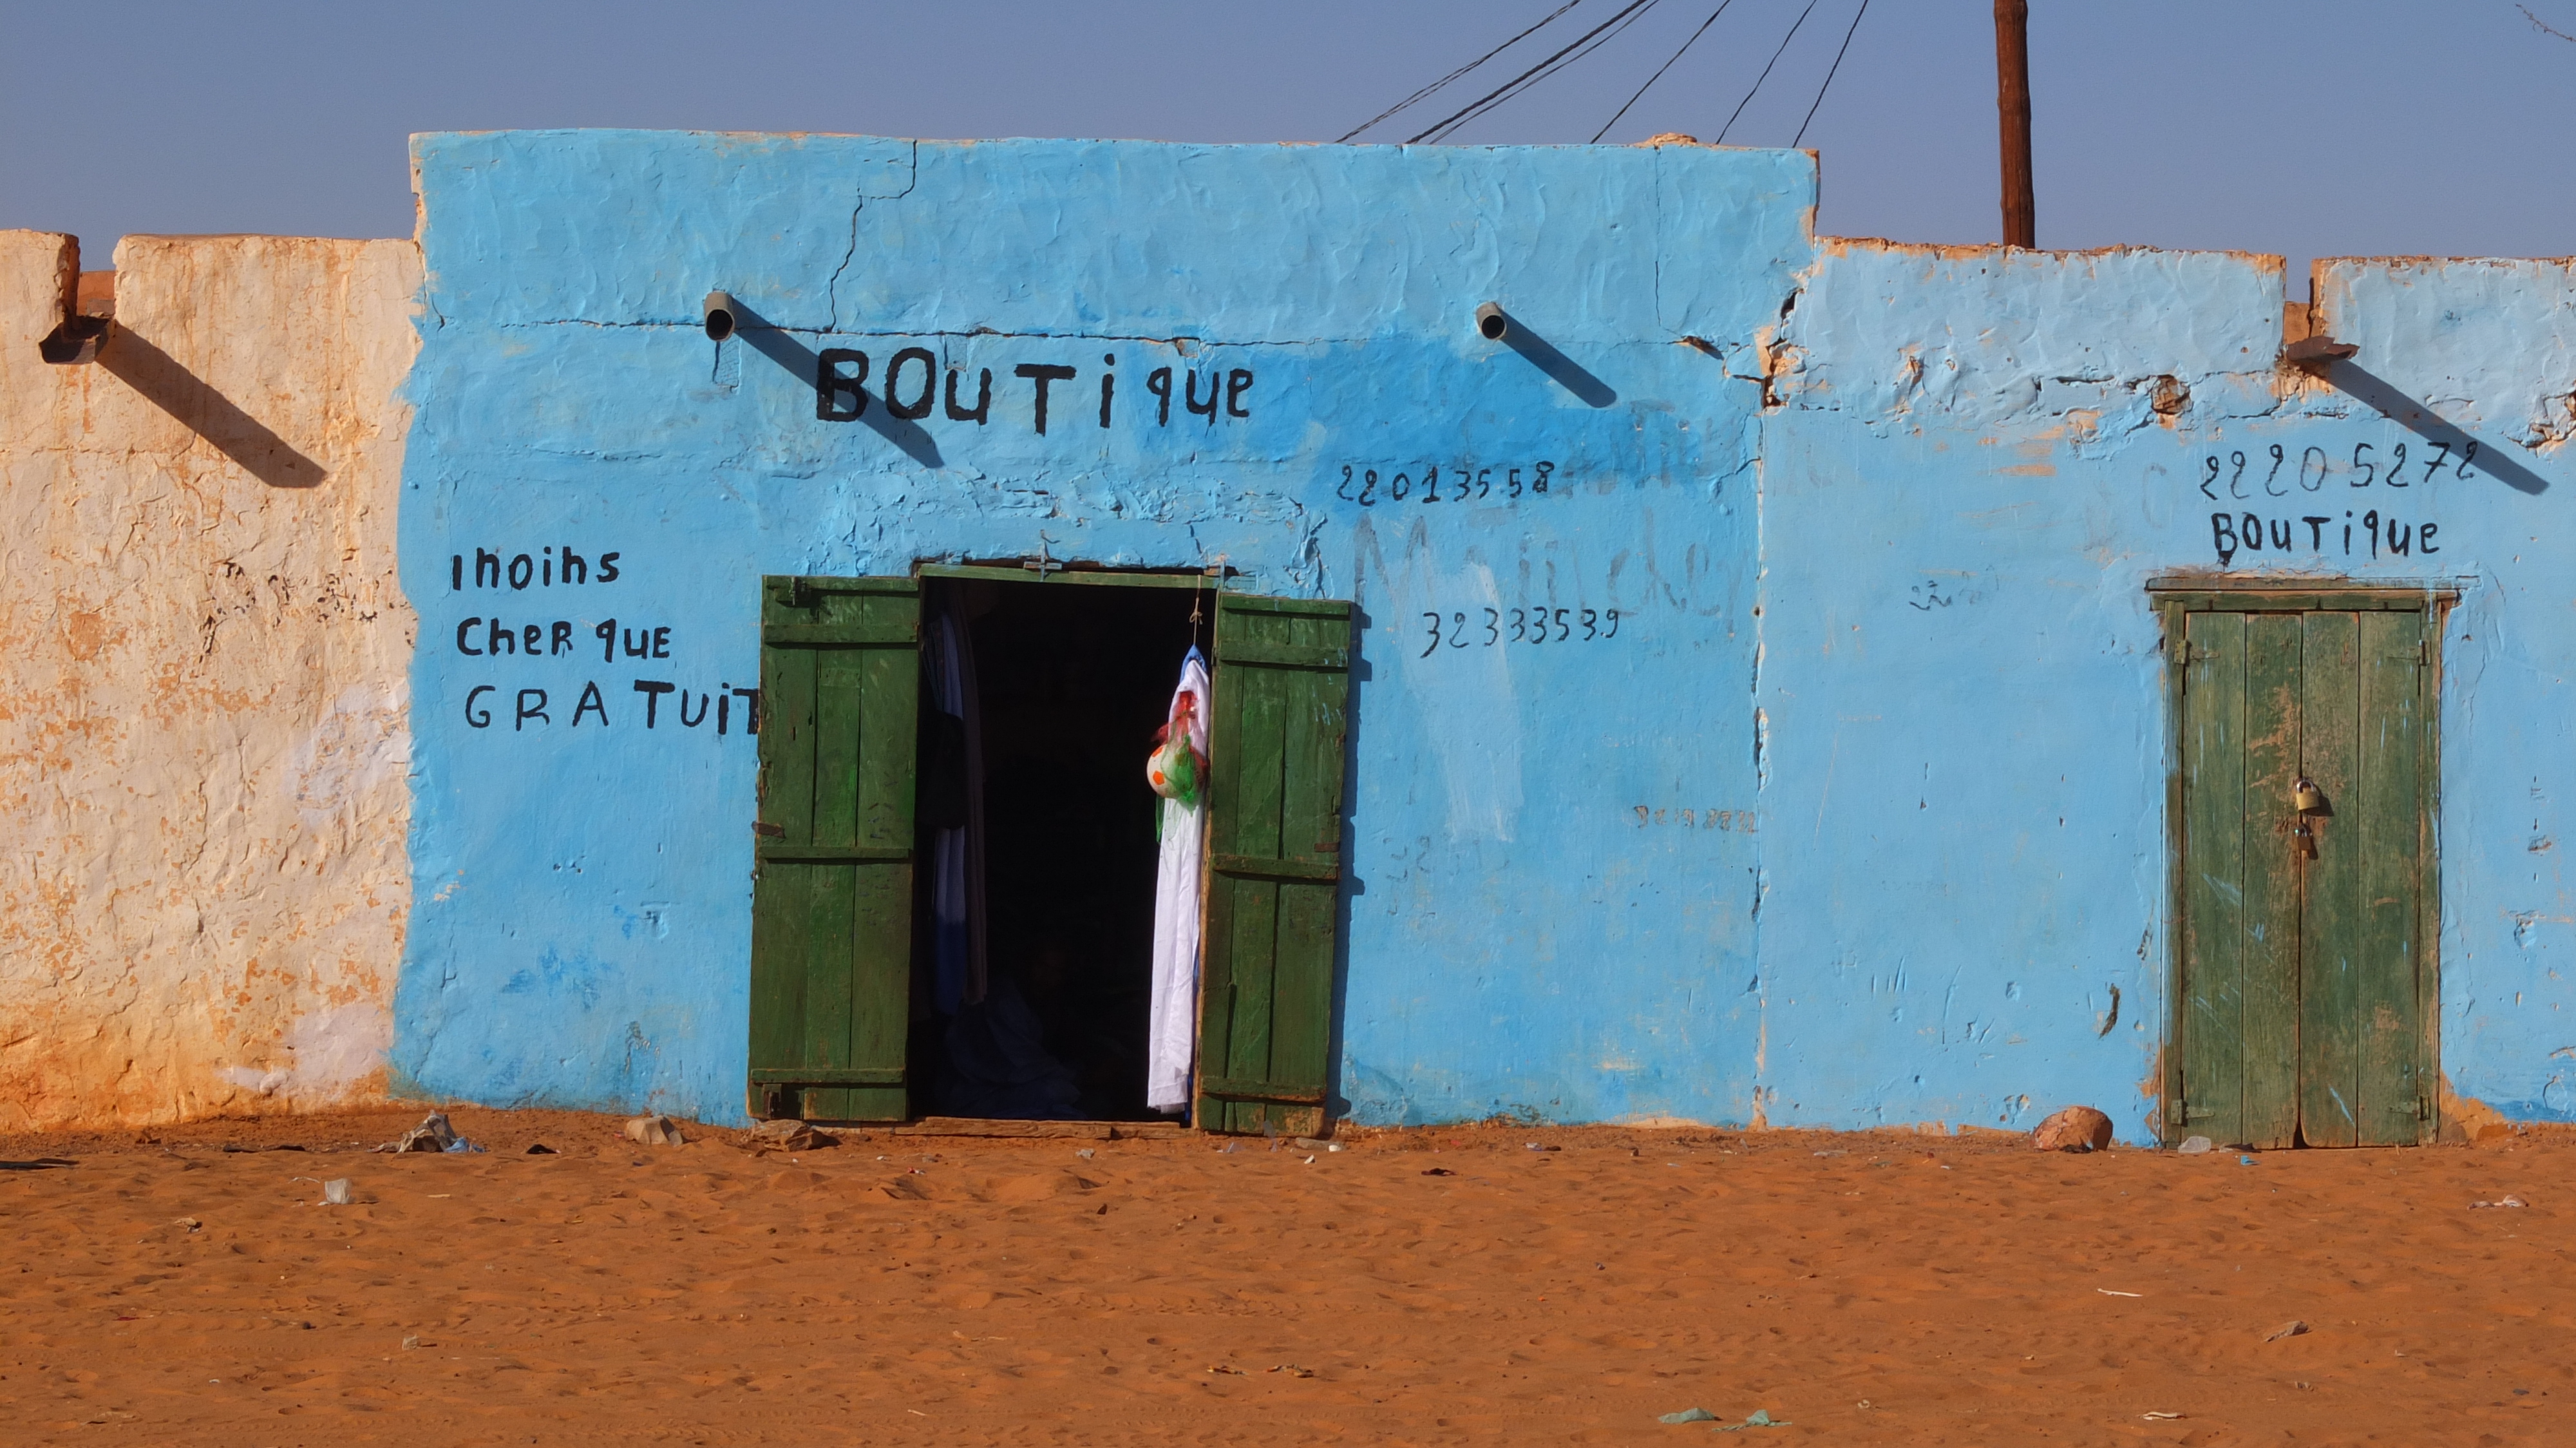 Boutique à Chinguetti en Mauritanie